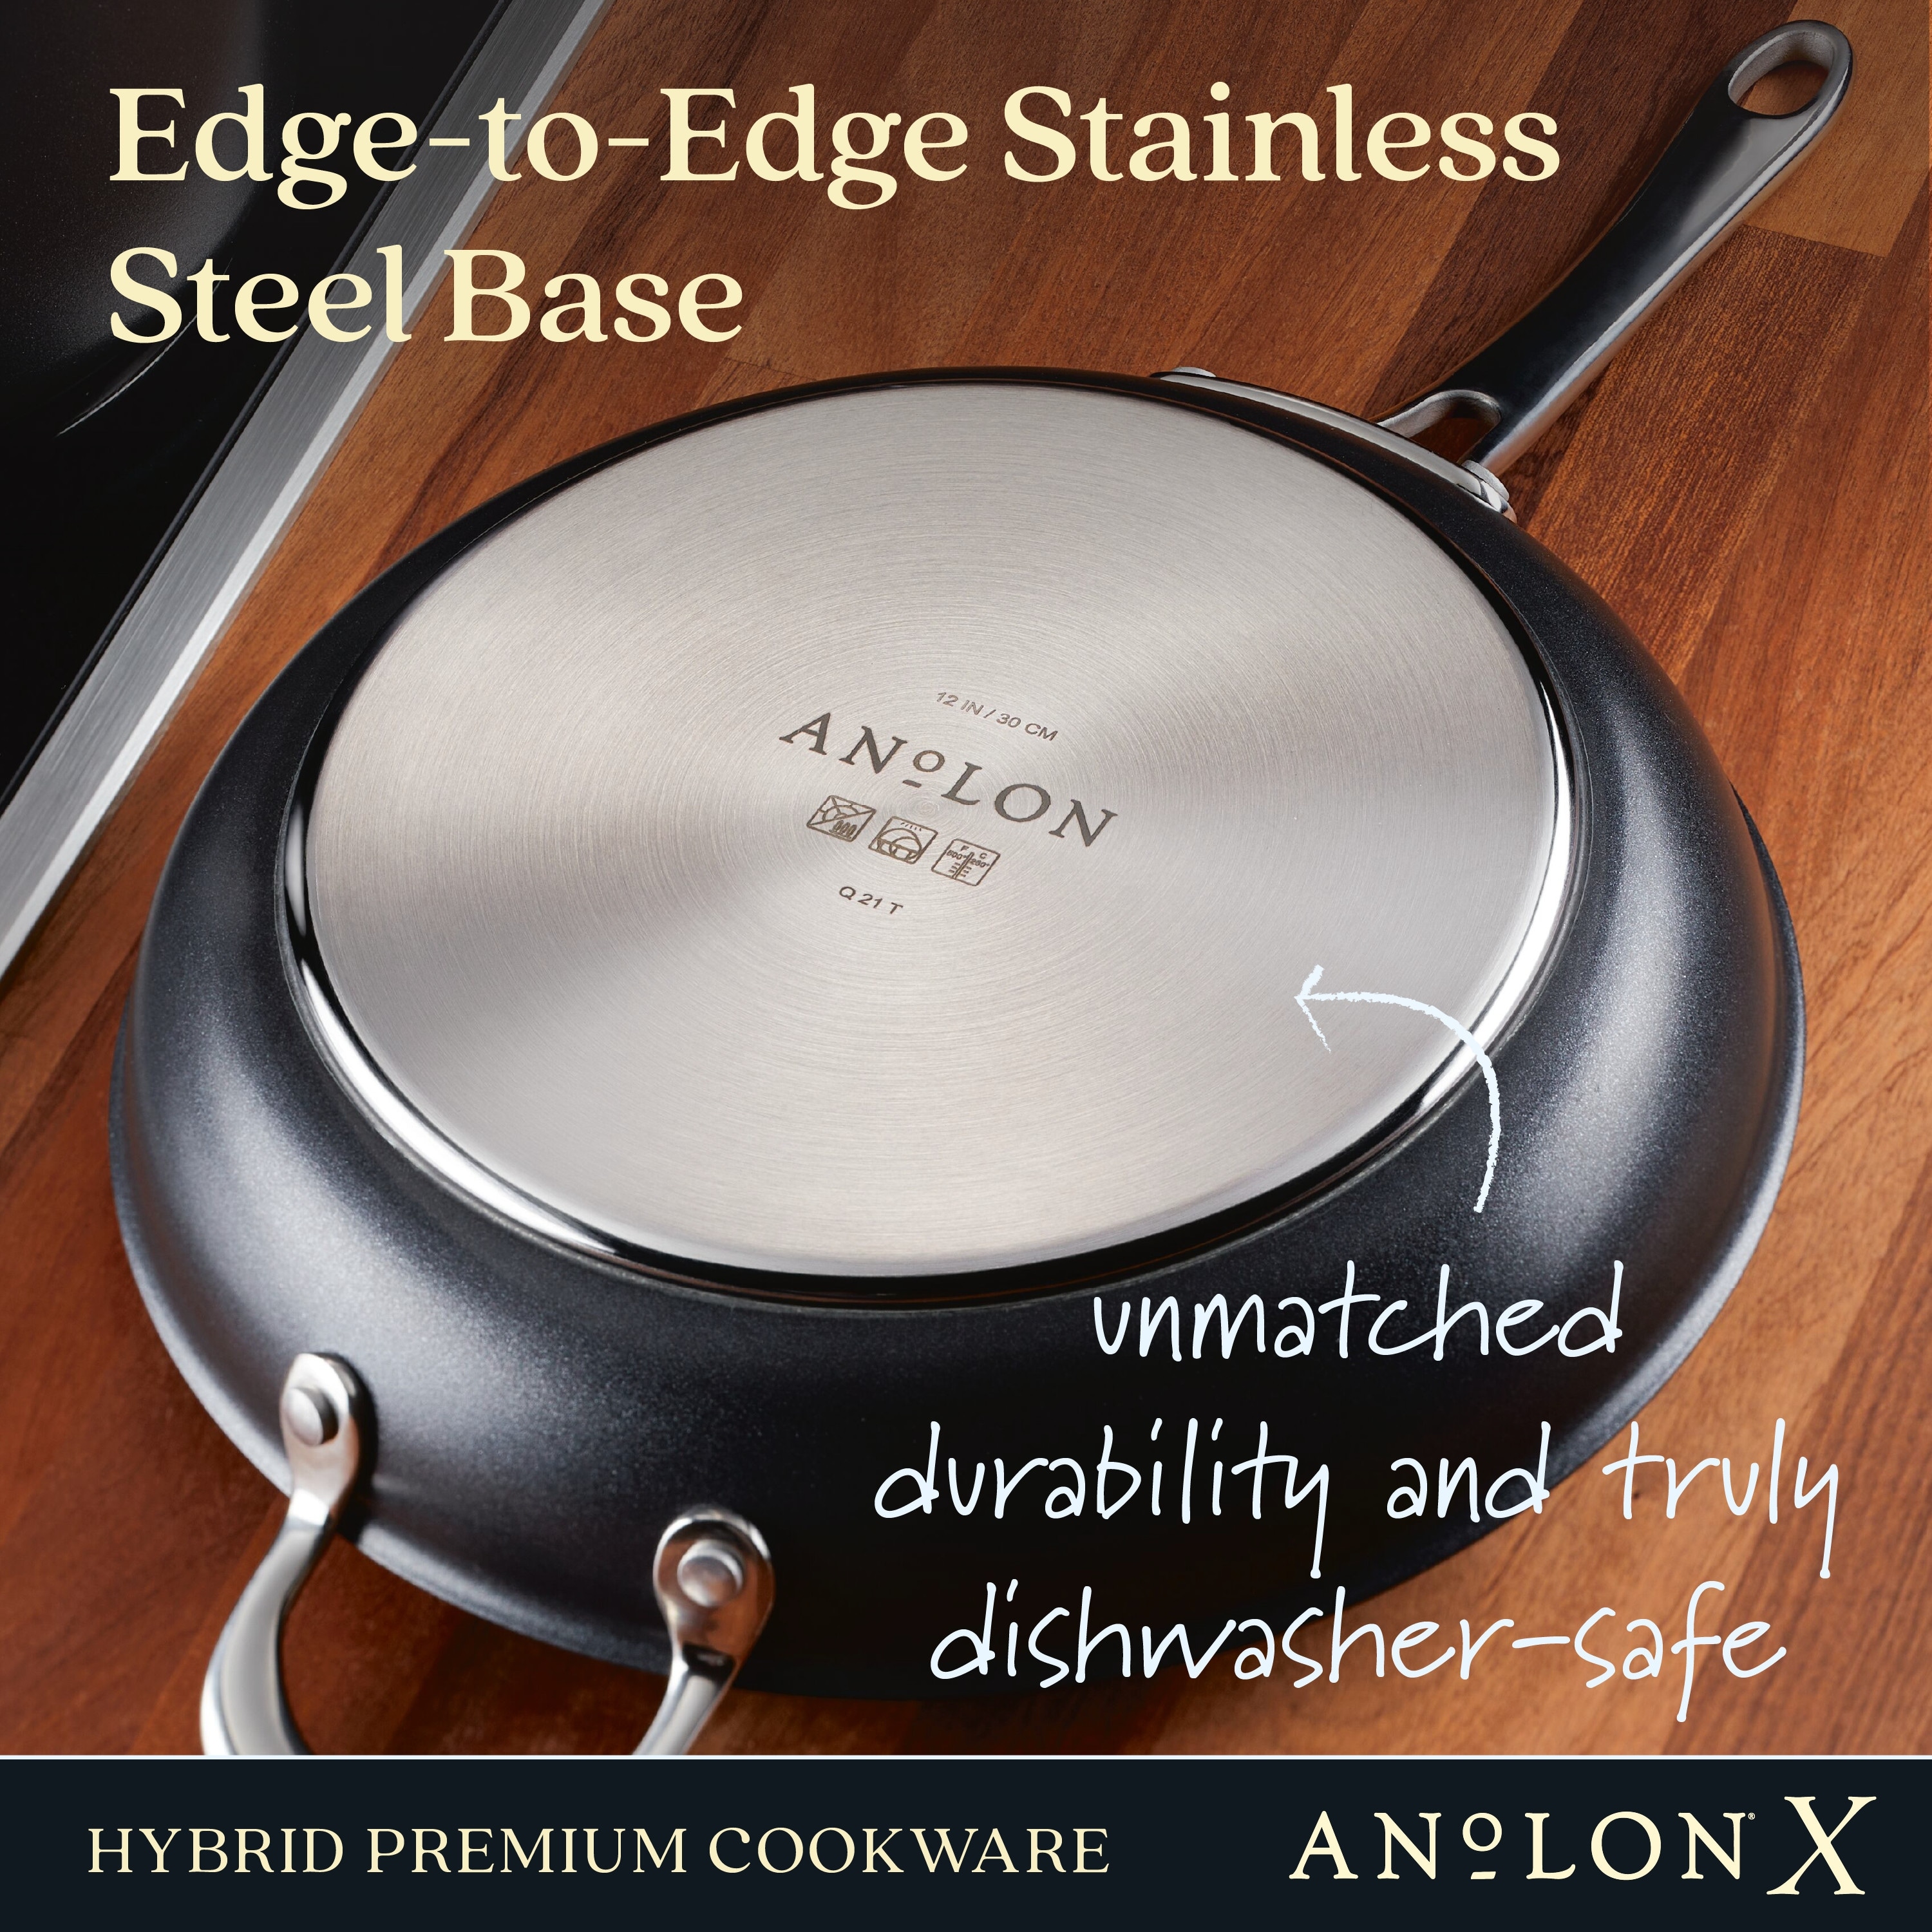 Anolon Achieve Hard Anodized Nonstick Frying Pan - Bed Bath & Beyond -  37781262